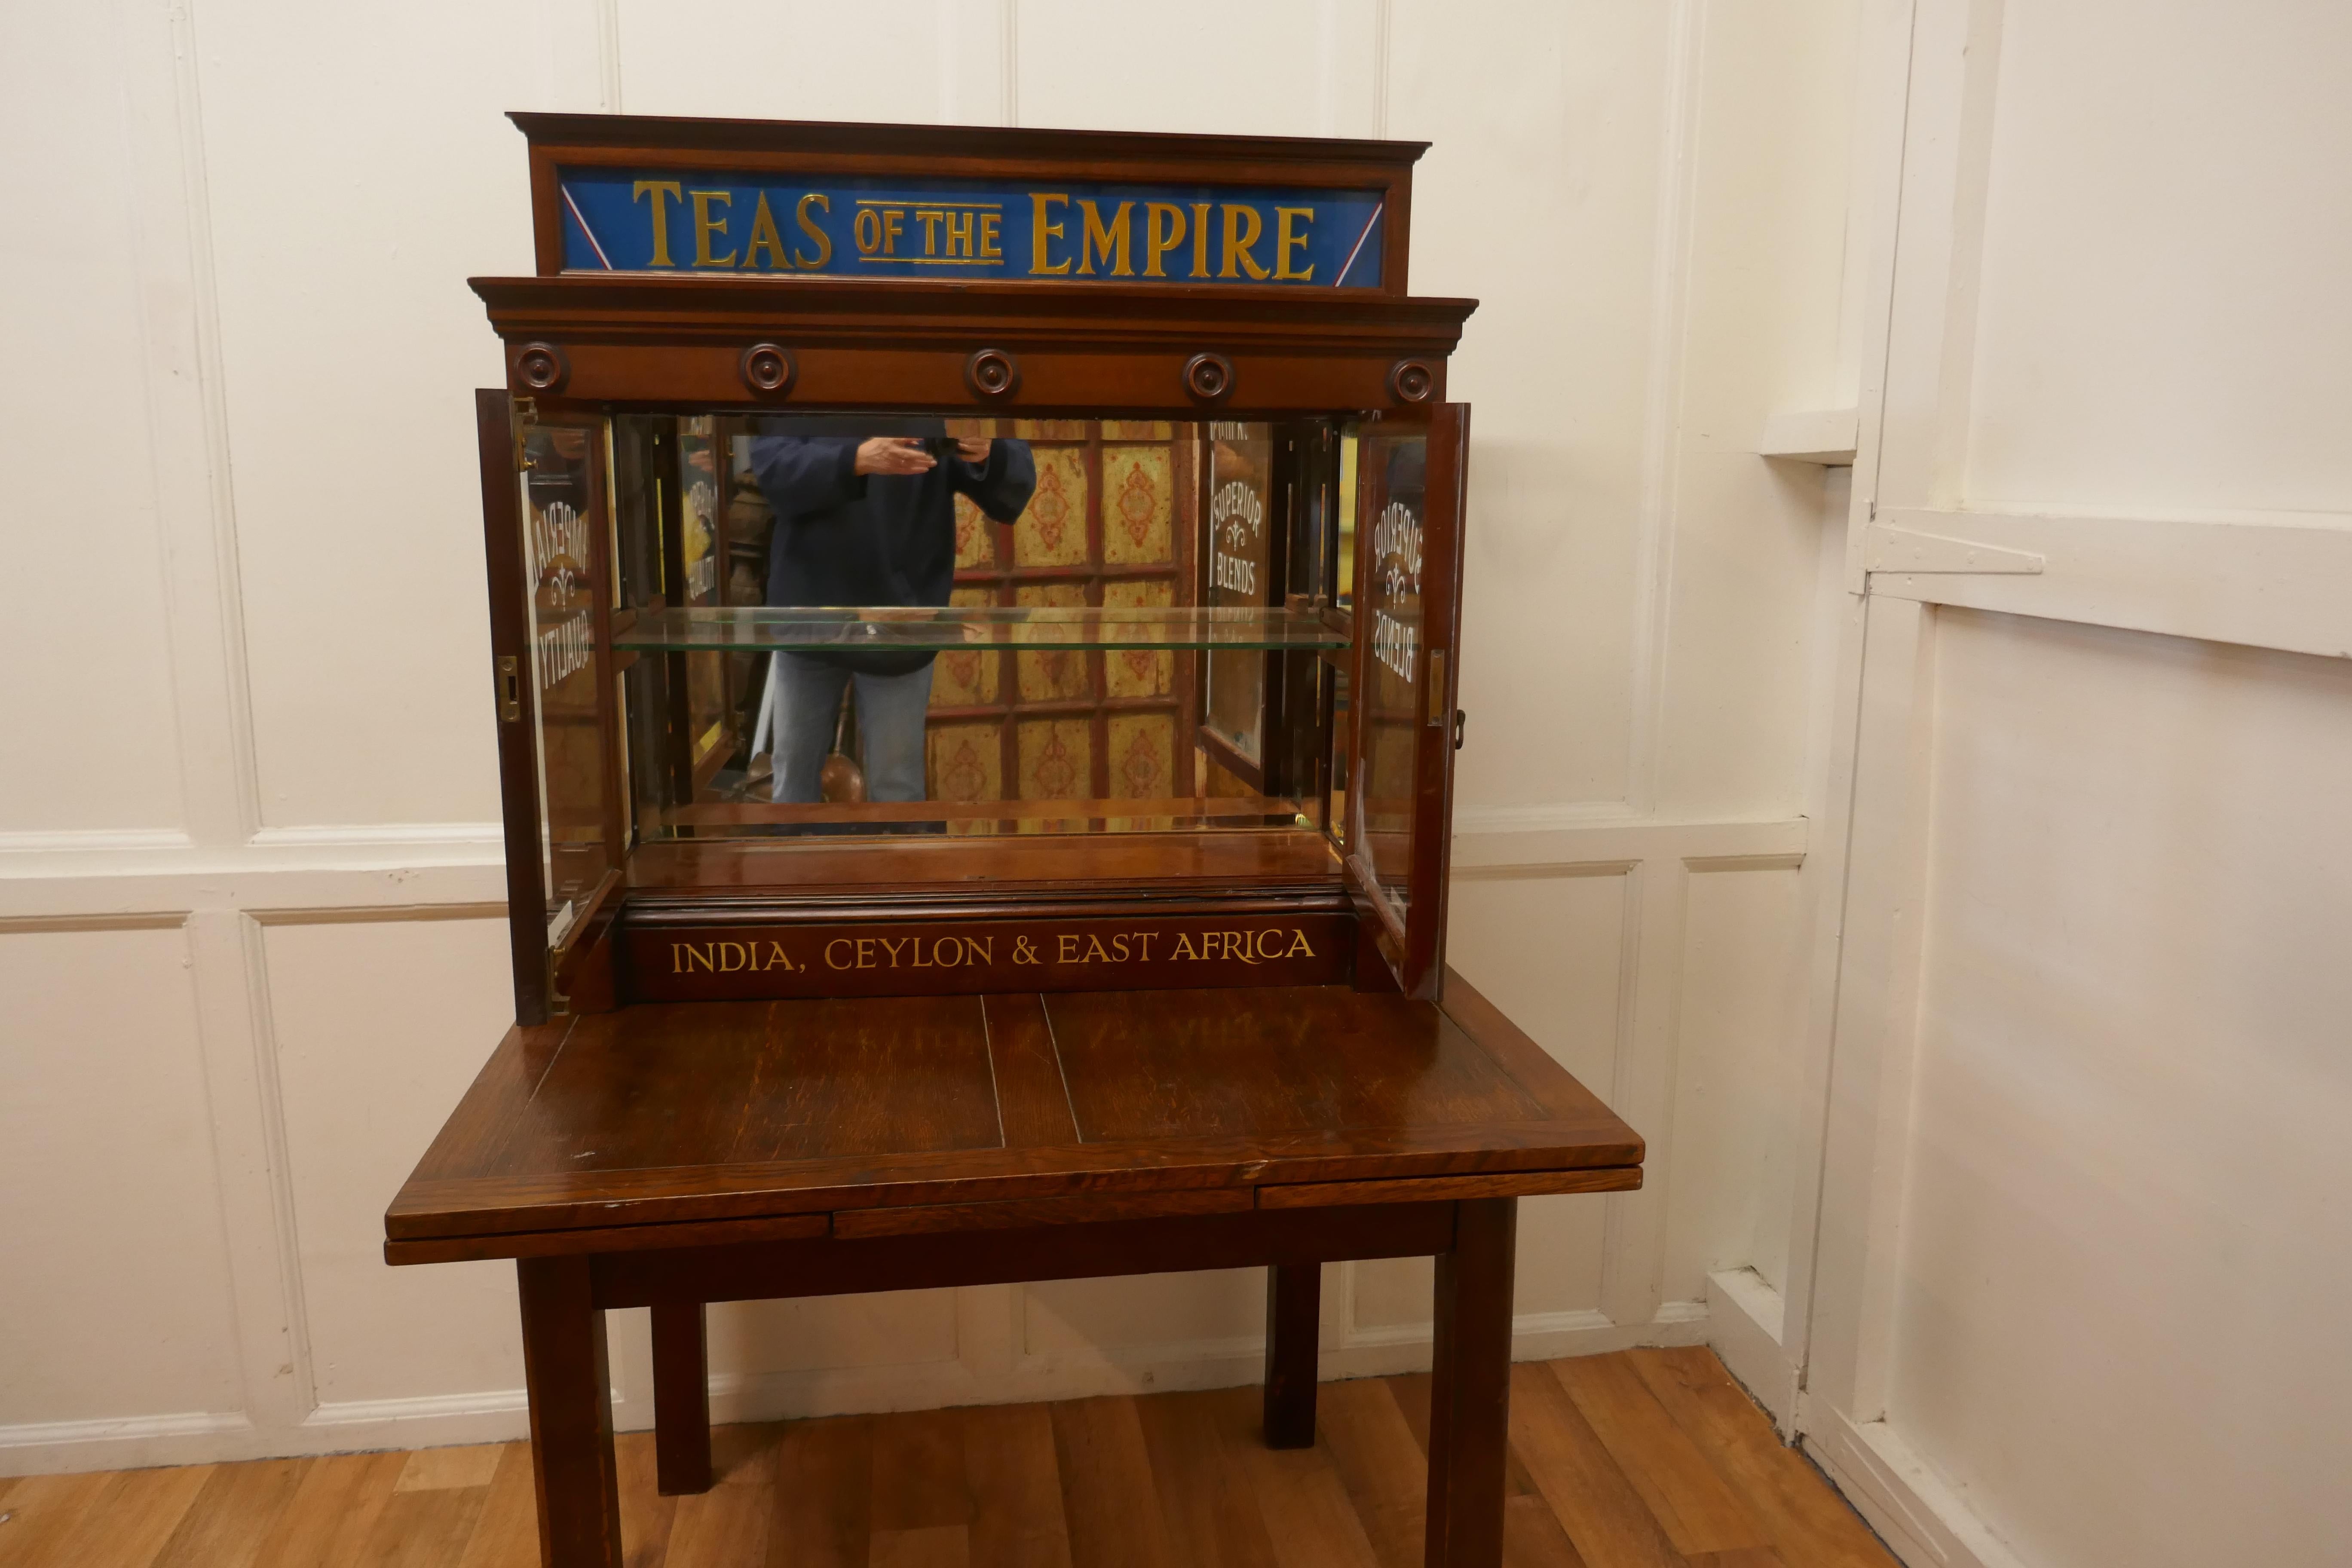  Victorian Empire Tea Cabinet, Tea Room, Cafe Display  A magnificent piece  For Sale 4